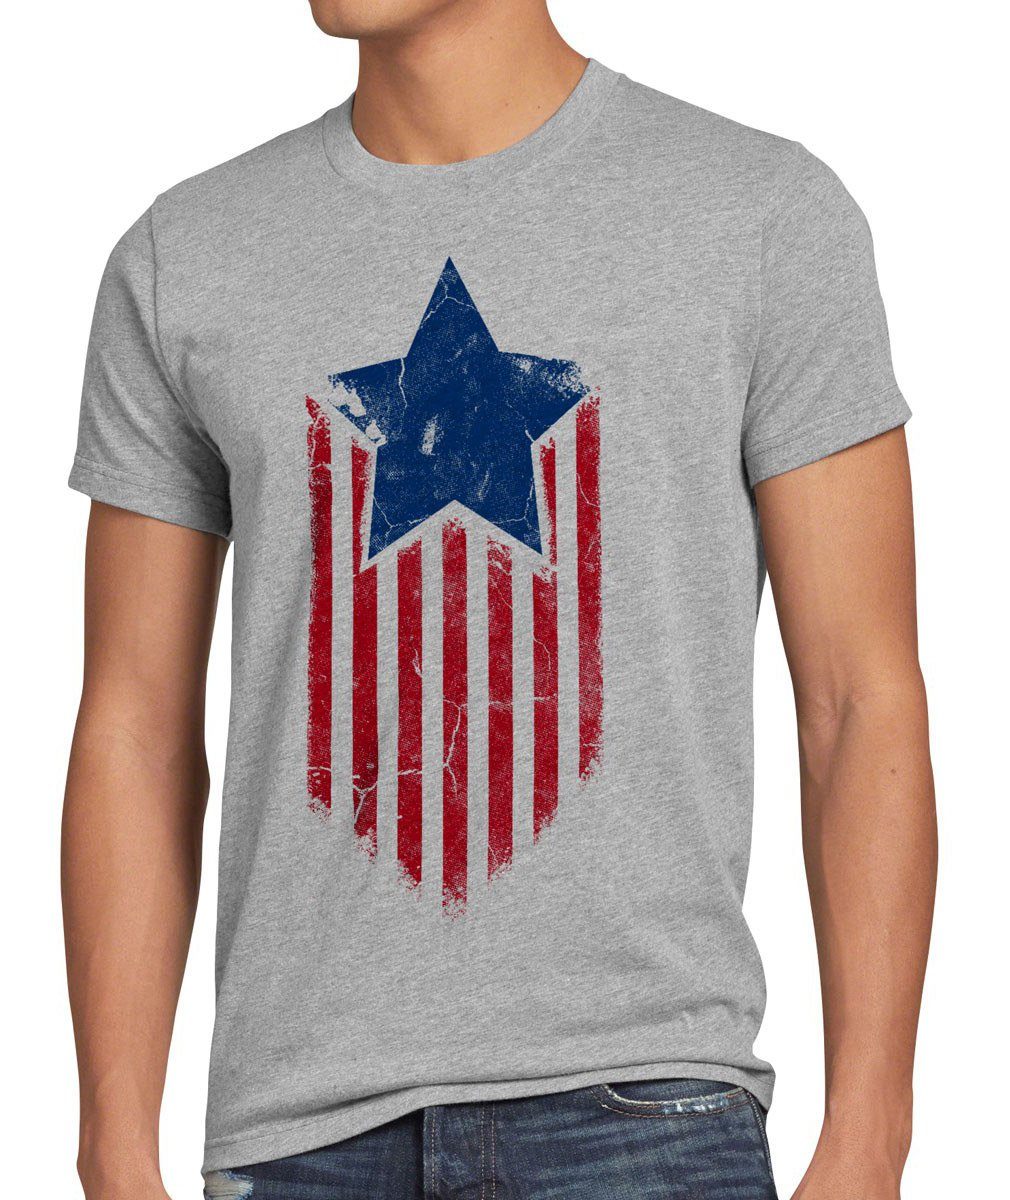 style3 Print-Shirt Herren T-Shirt USA Stars Stripes Amerika Held Flagge Superheld States captain us grau meliert